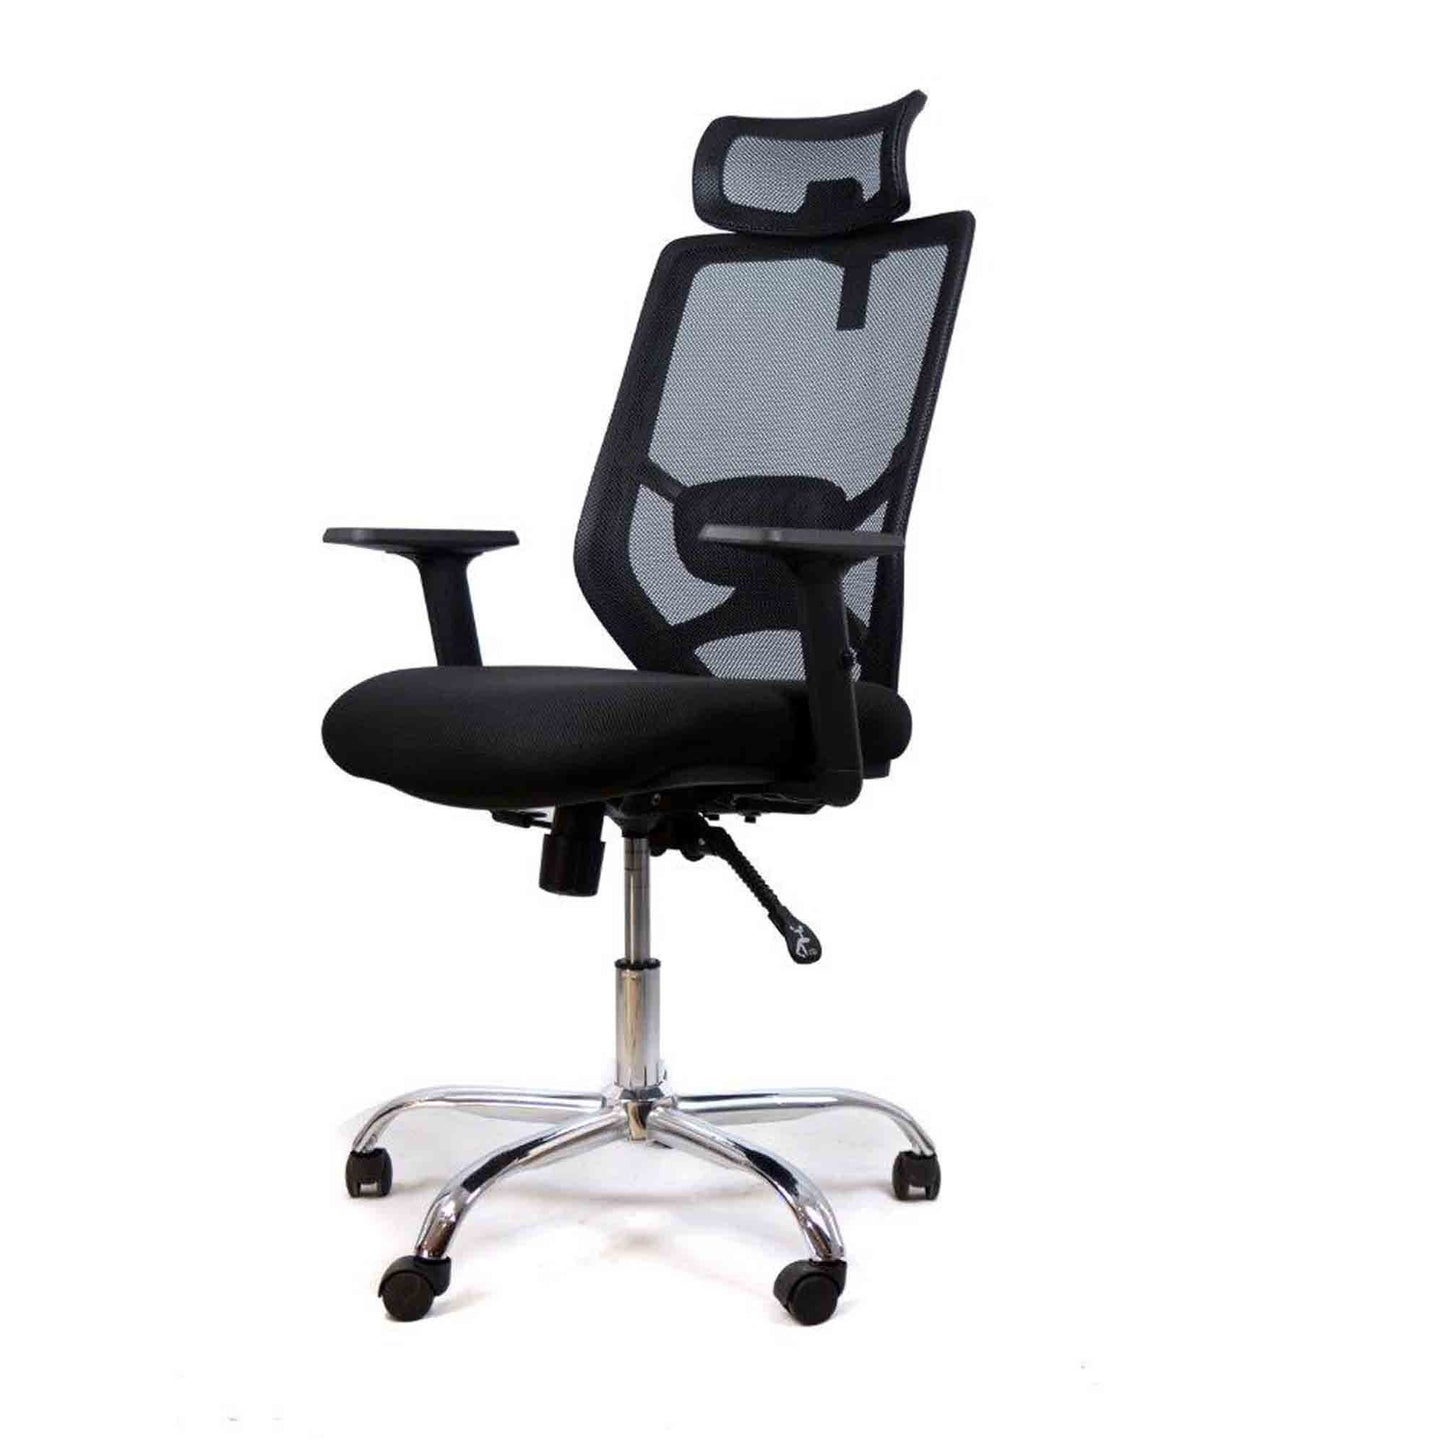 Office Chair - mch09hi